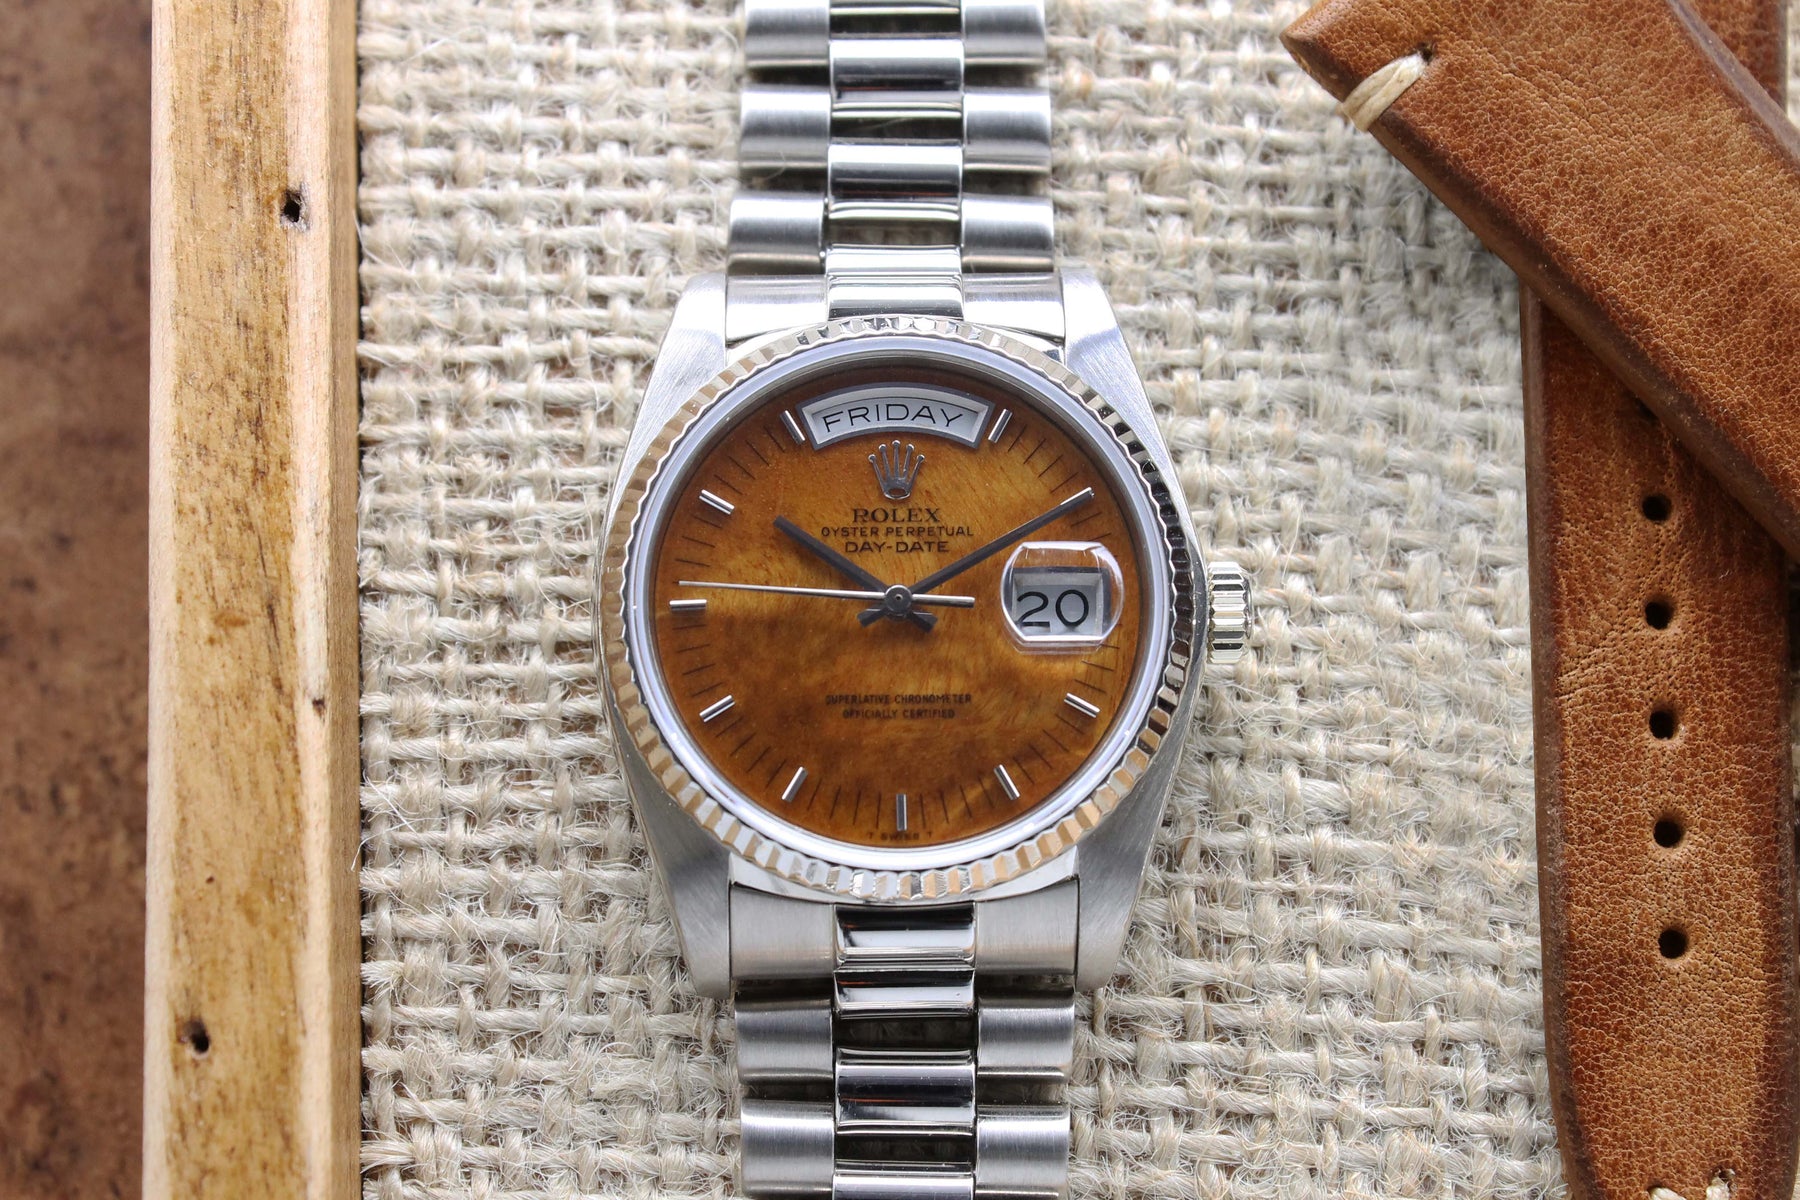 1983 Rolex Day Date White Gold Birch Wood Dial Ref. 18039